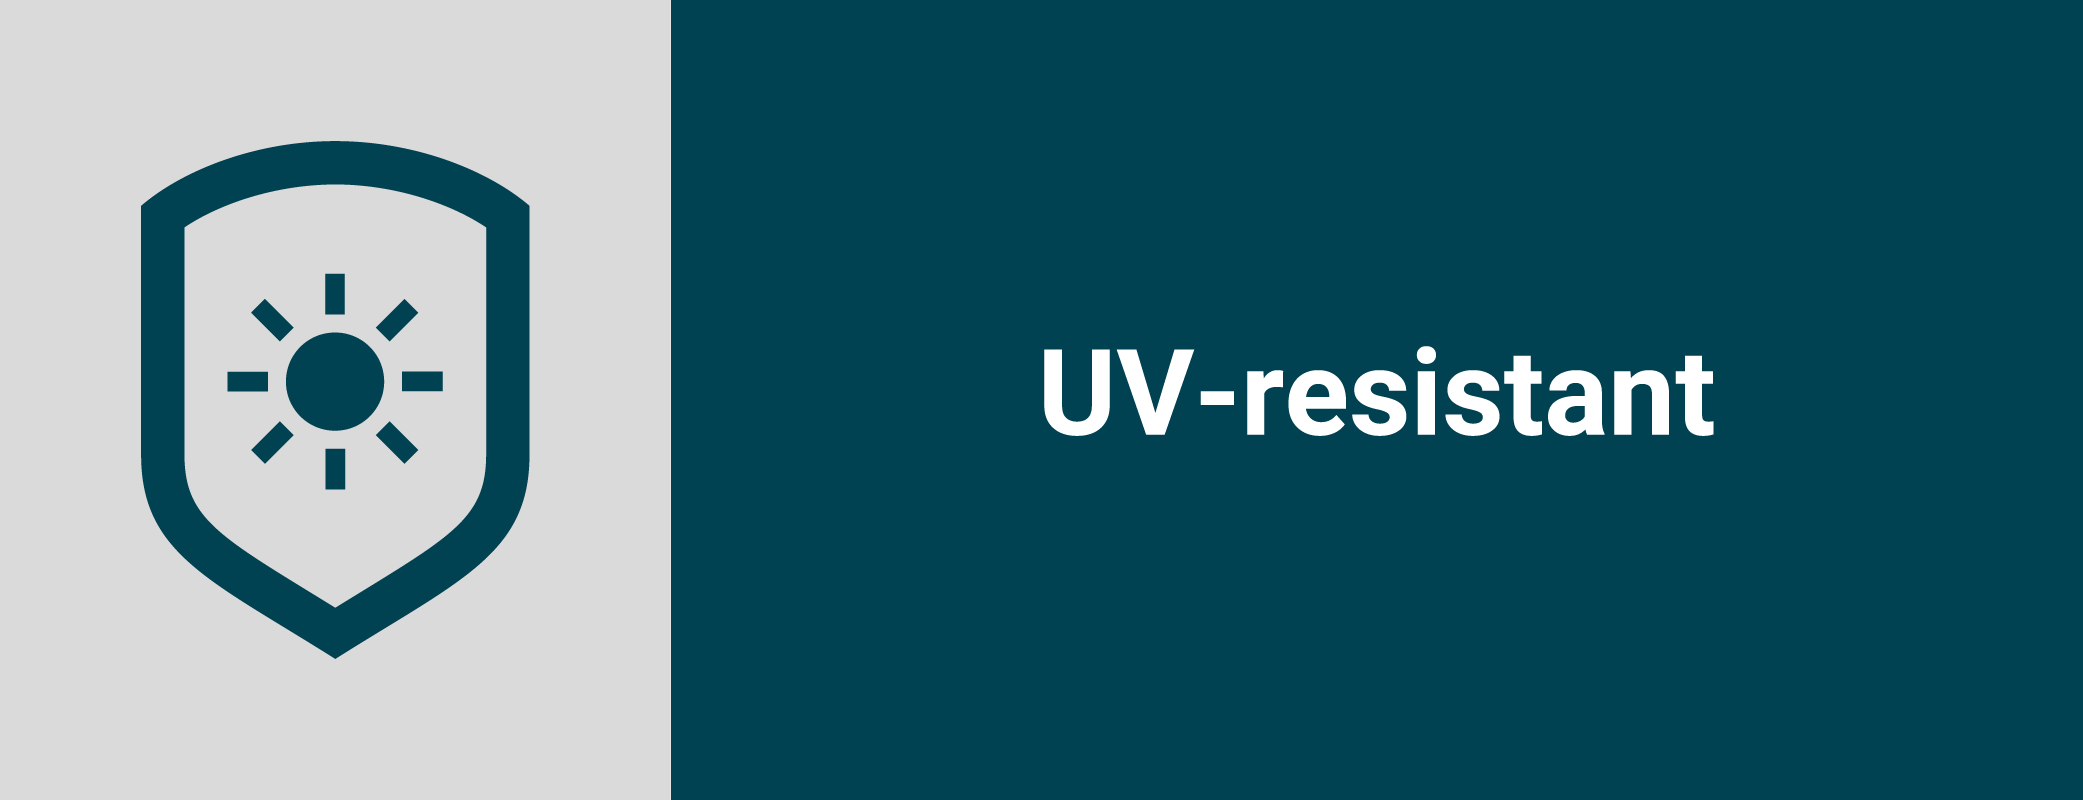 TFF_Icons_UV_resistant